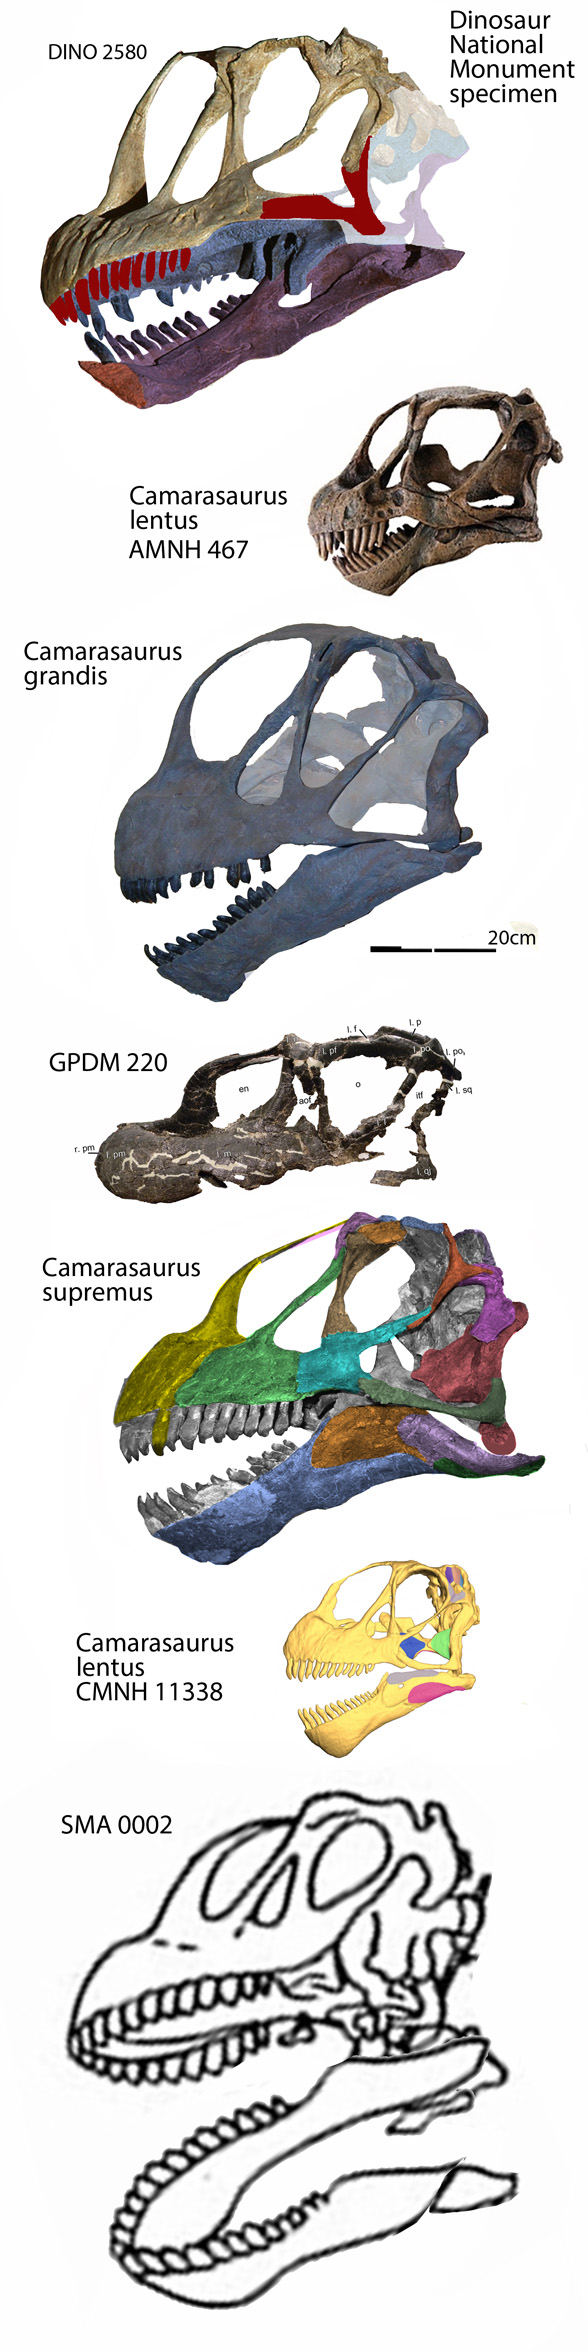 Camarasaurus skulls